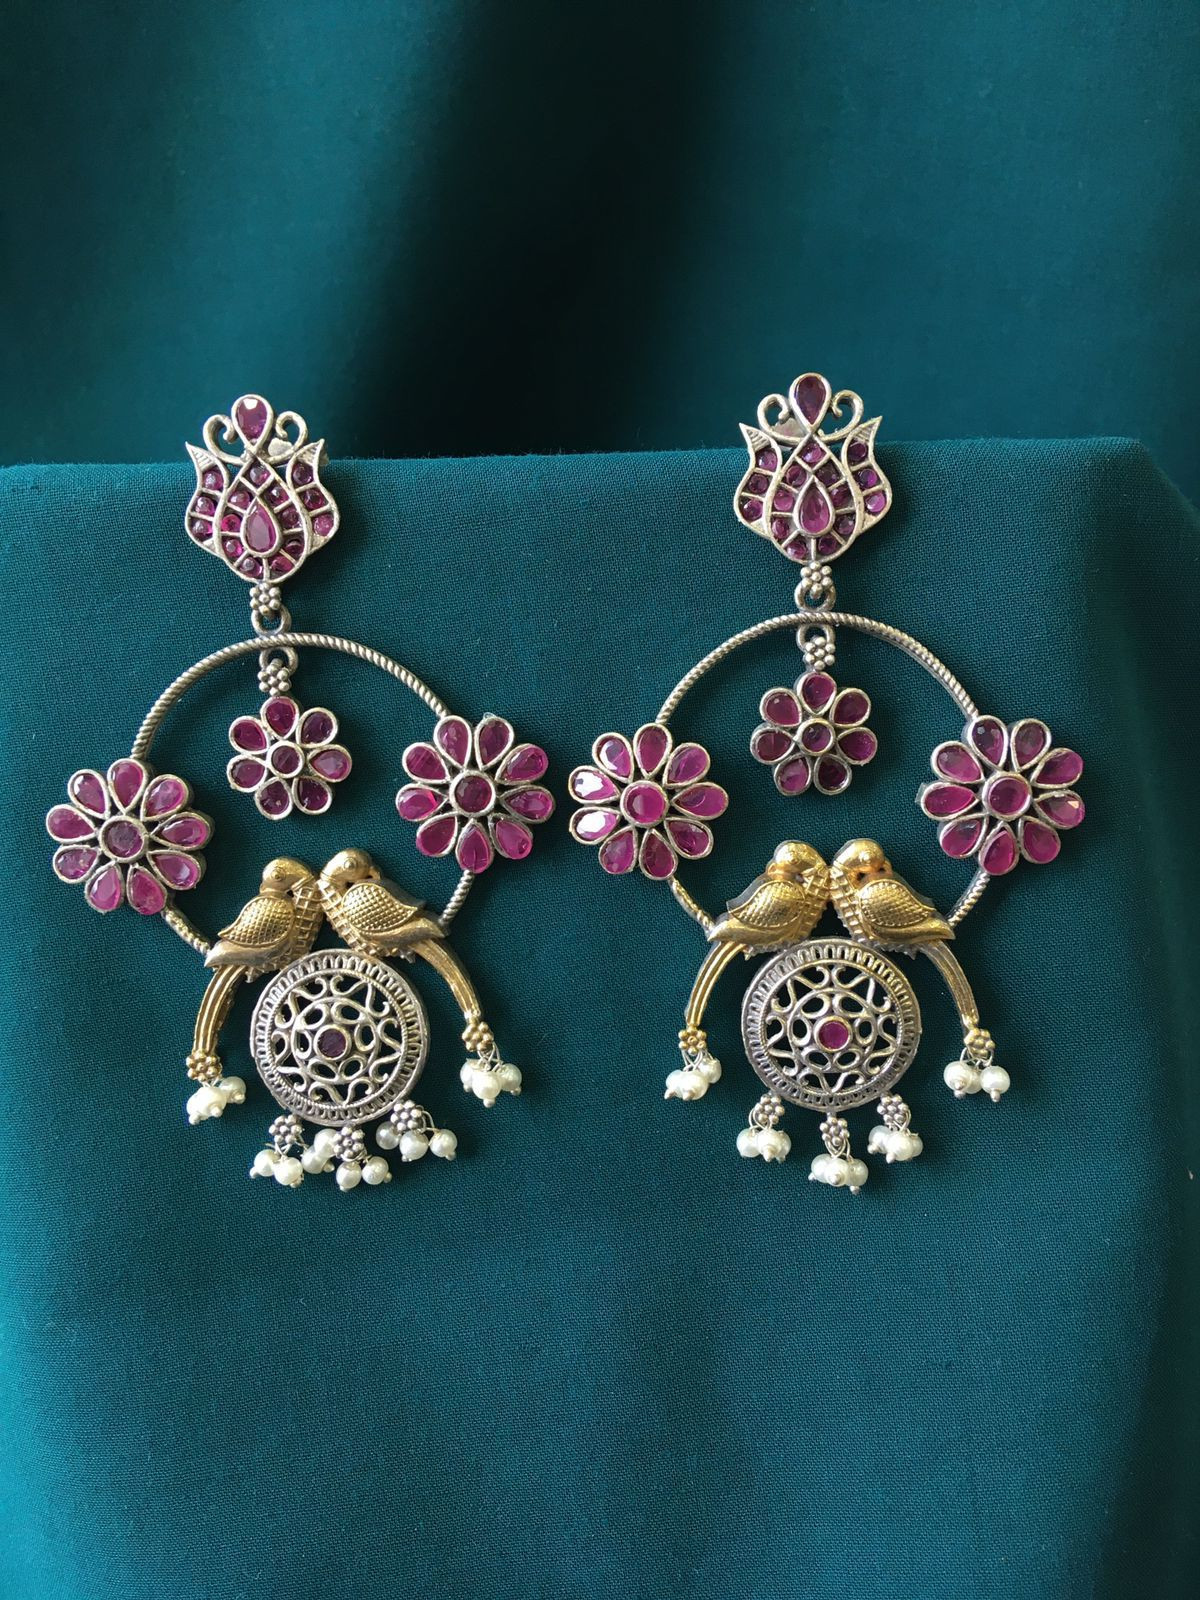 Beaded Stone Based Oxidized Earrings in Pink